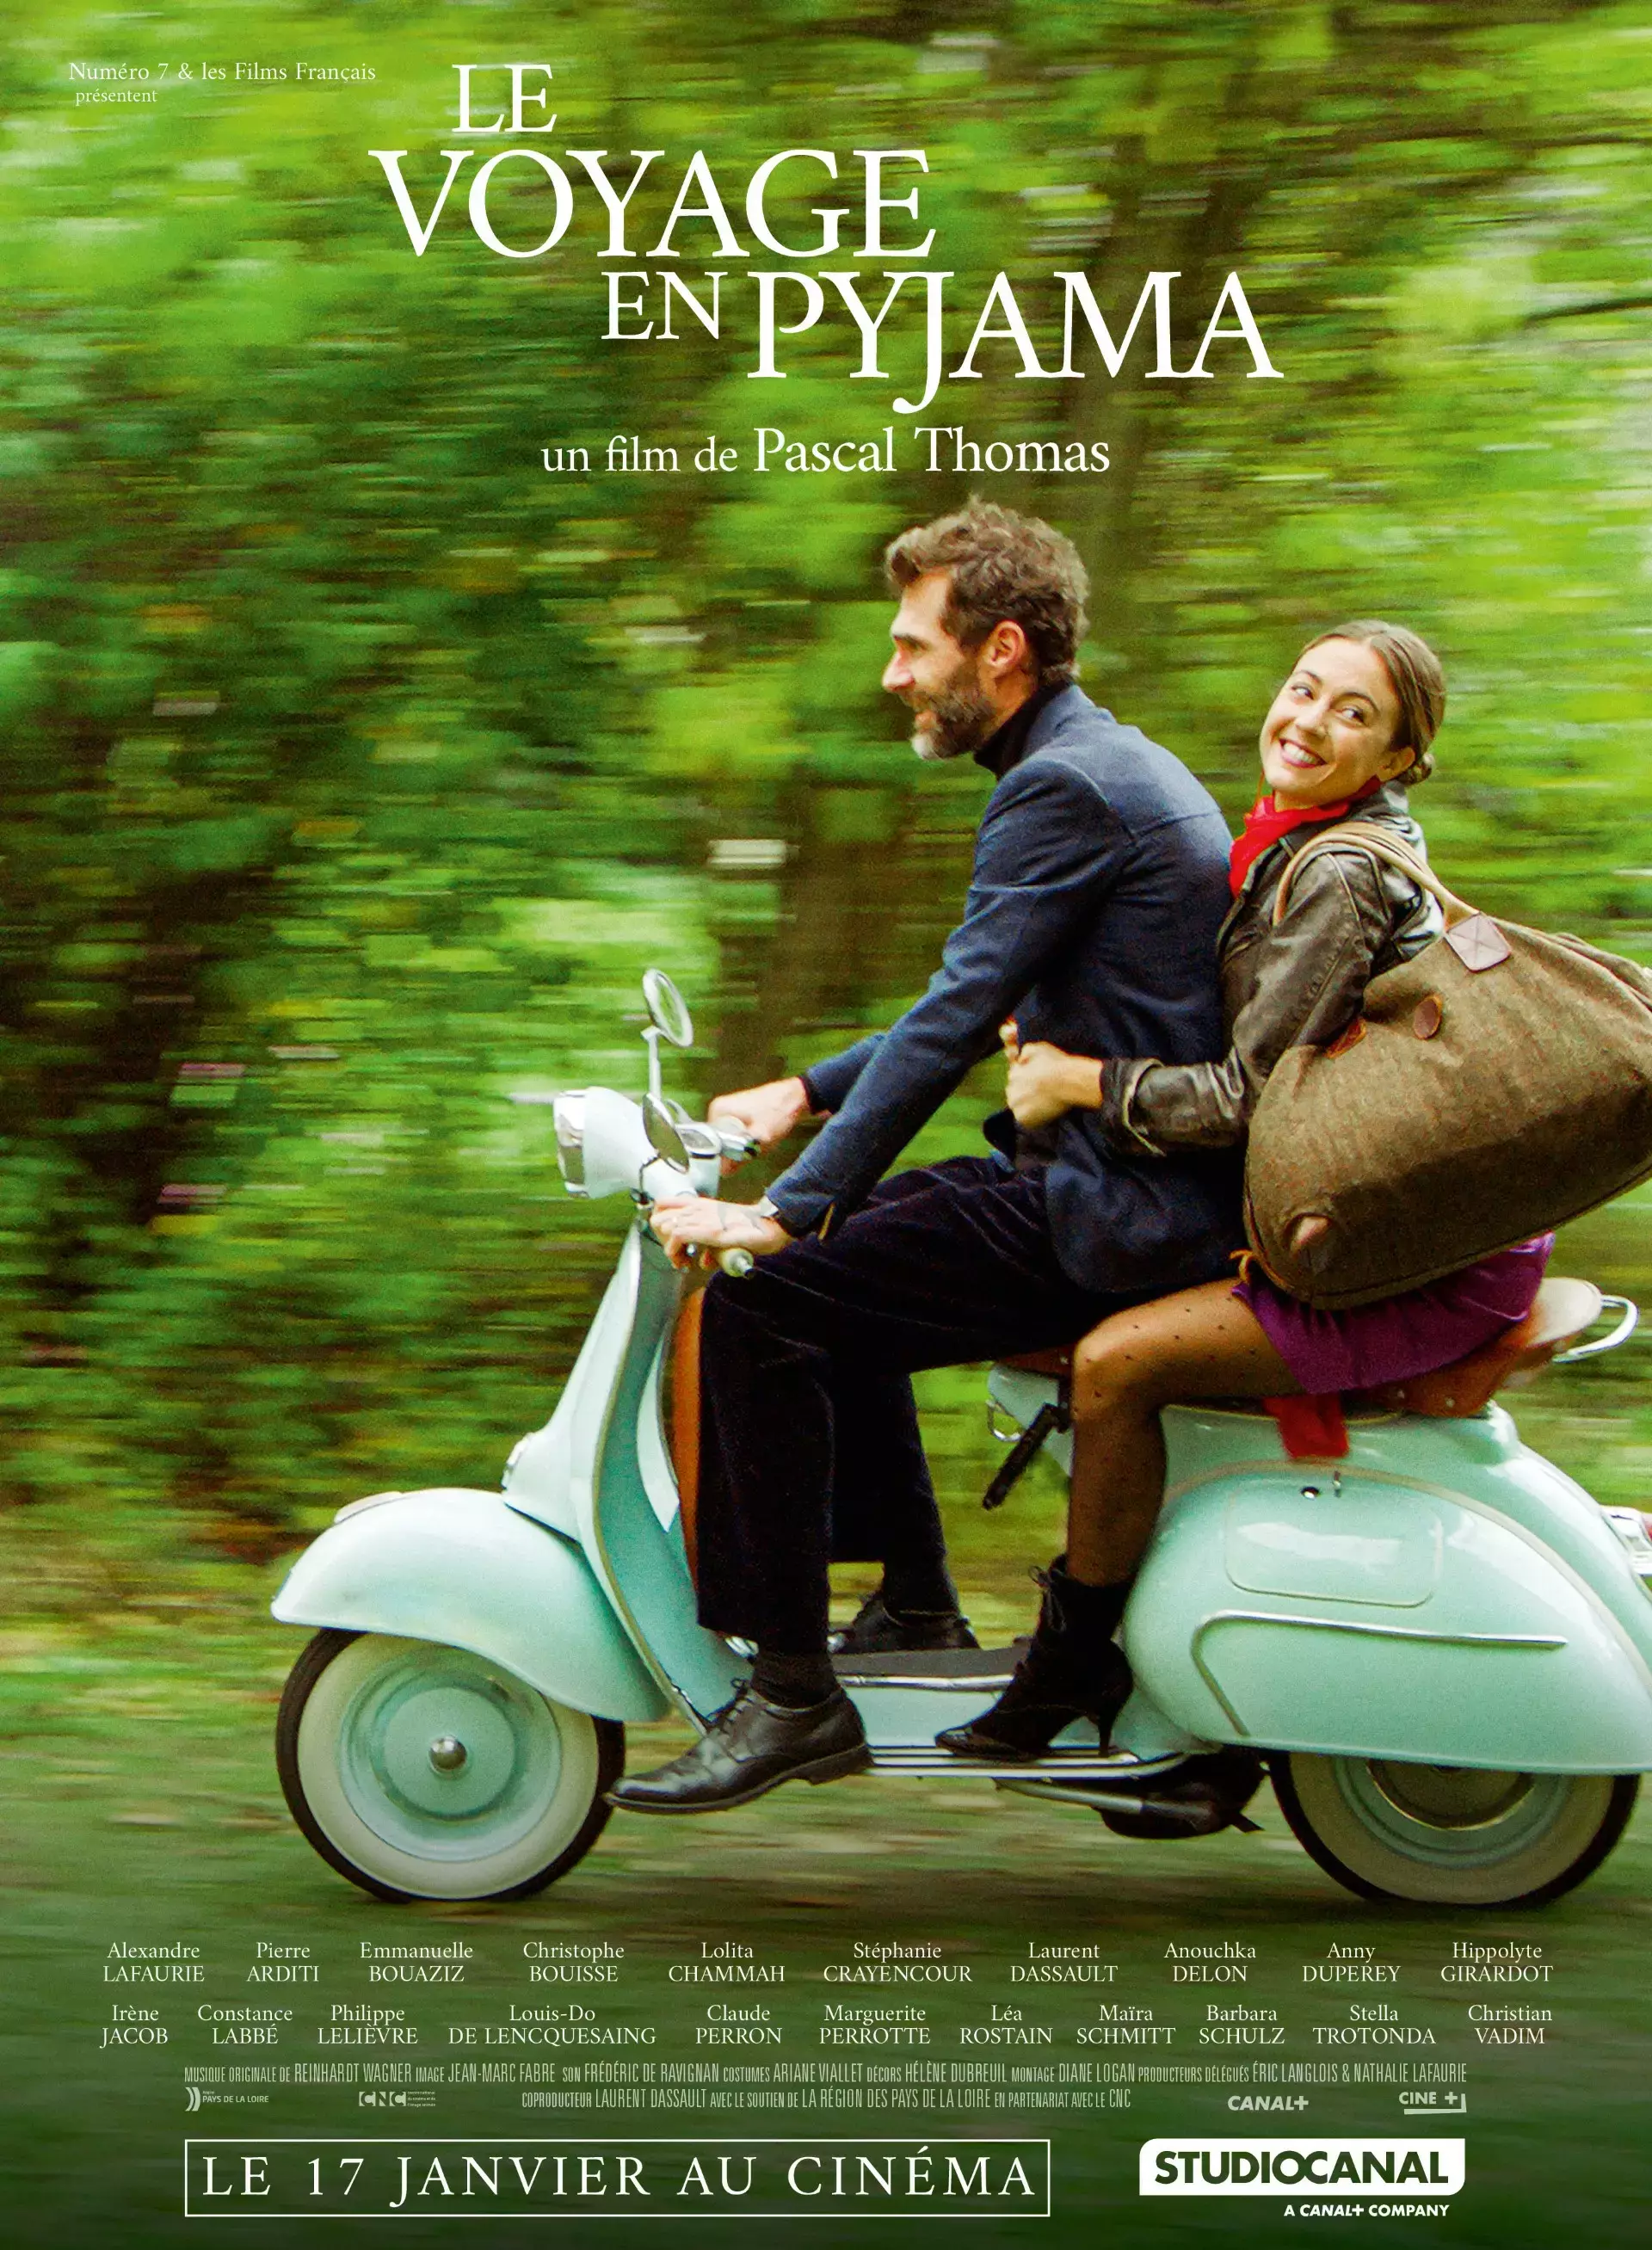 Film de Pascal Thomas "Le voyage en pyjama" 